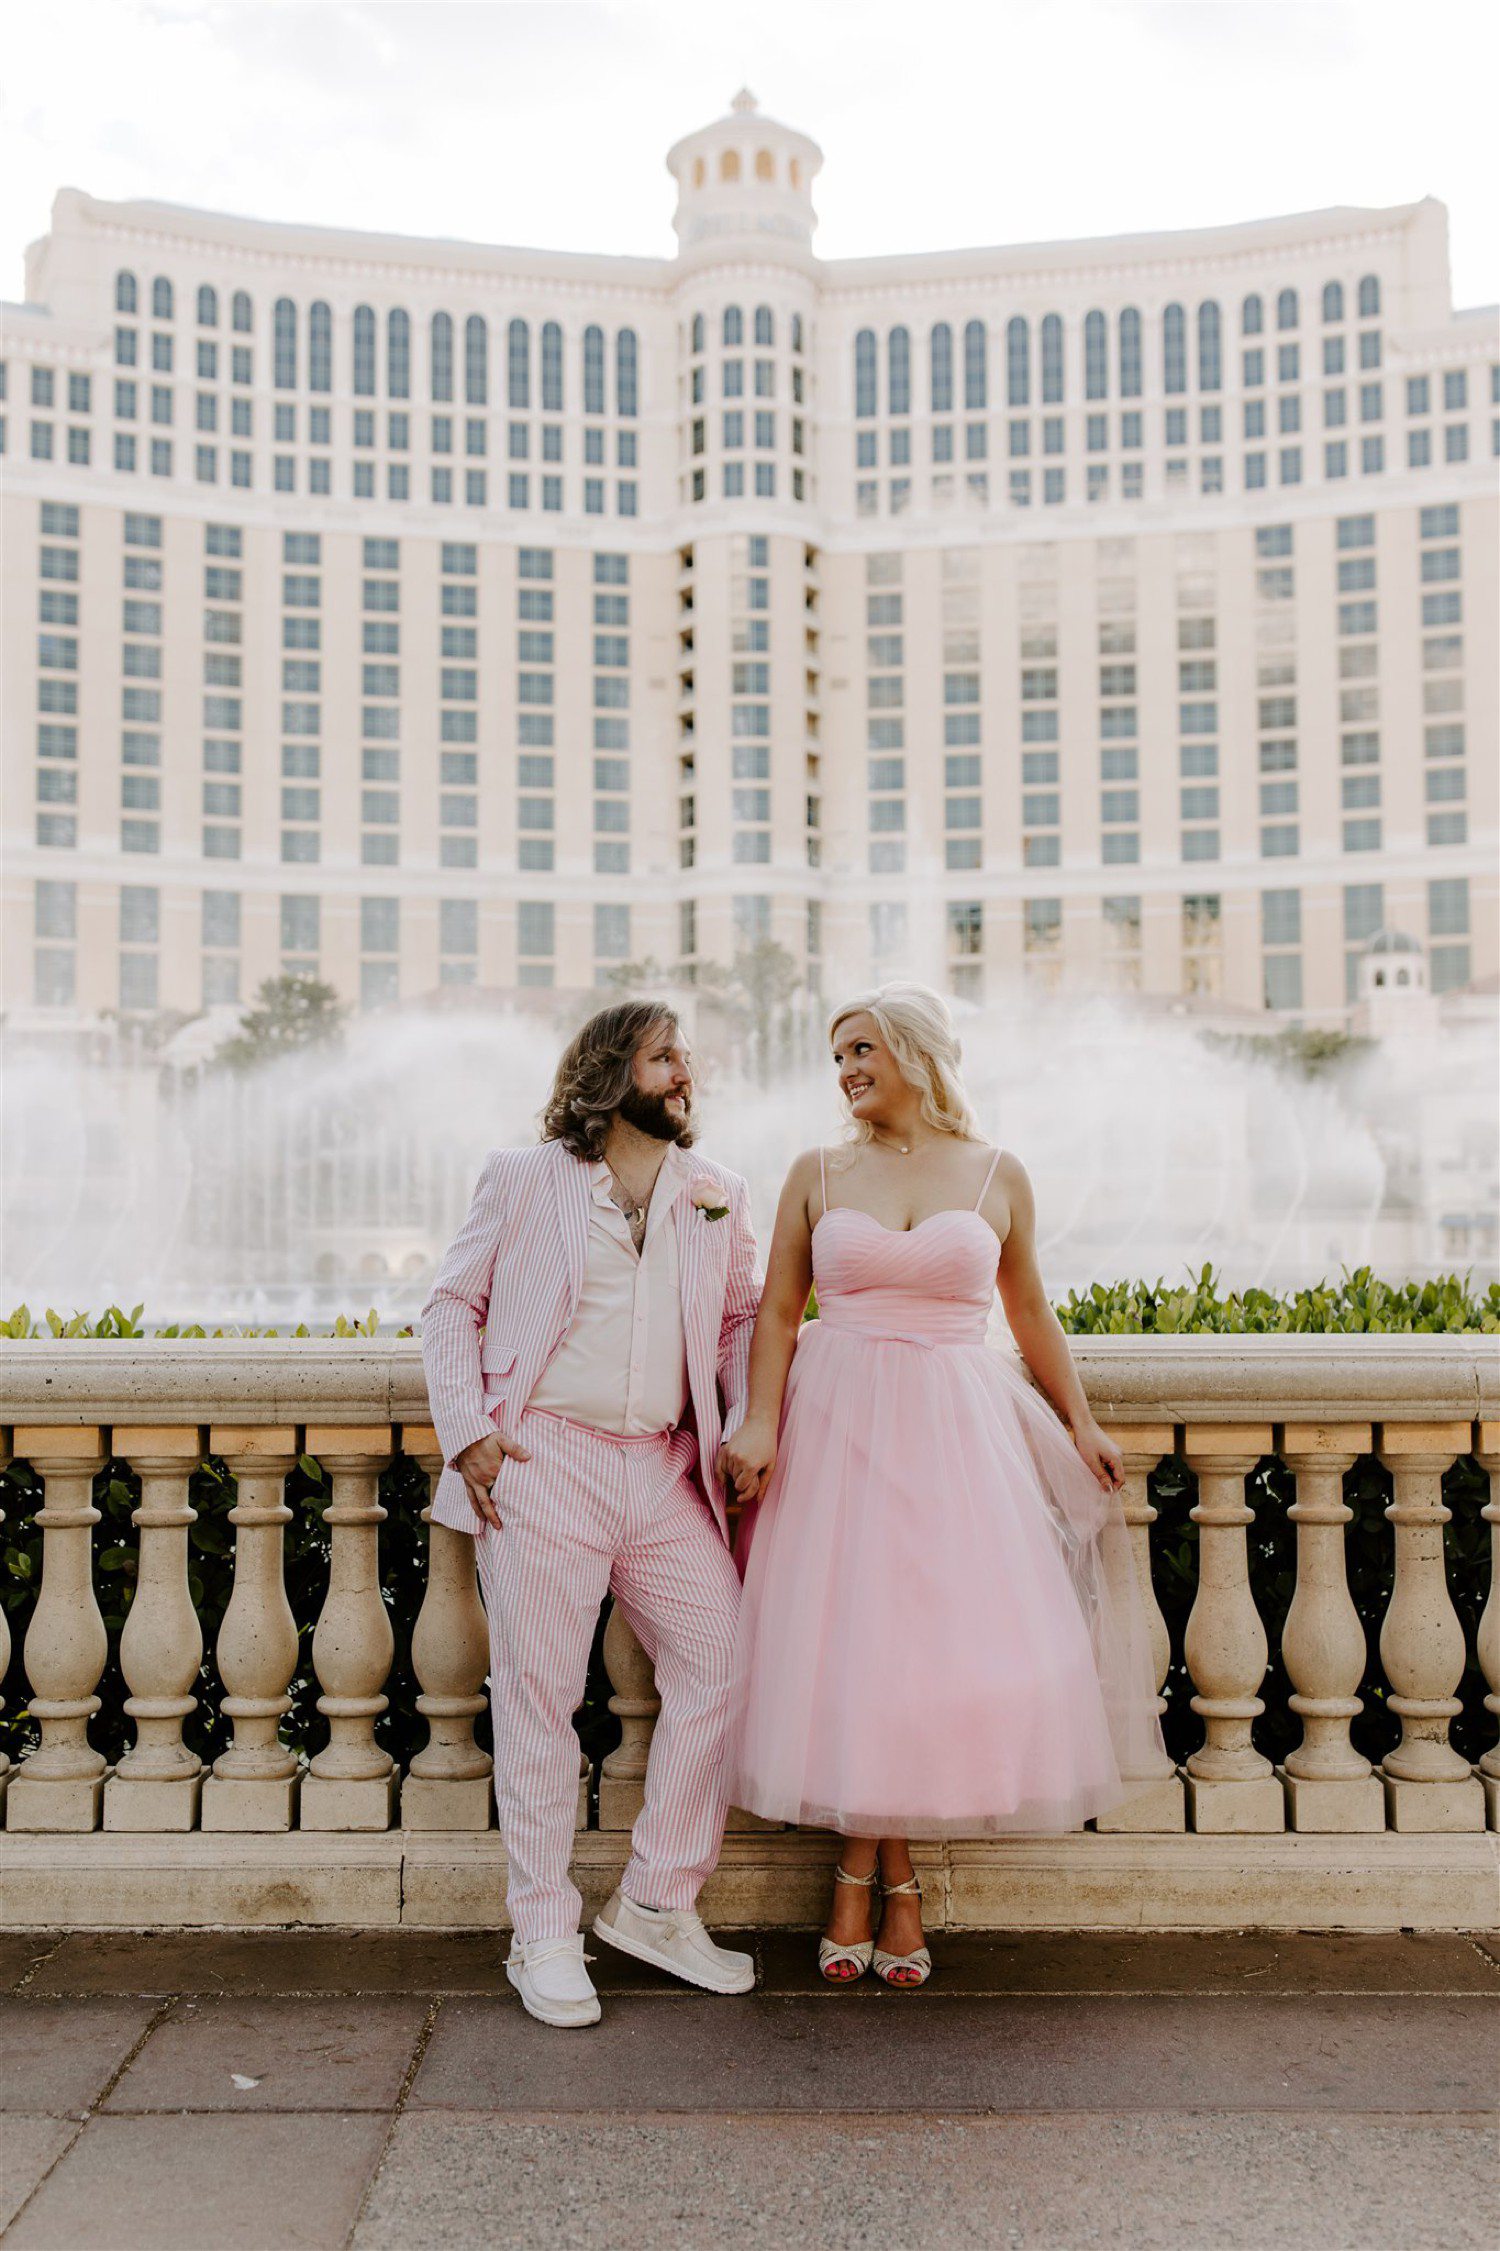 Las Vegas wedding photos at the Bellagio Fountains.